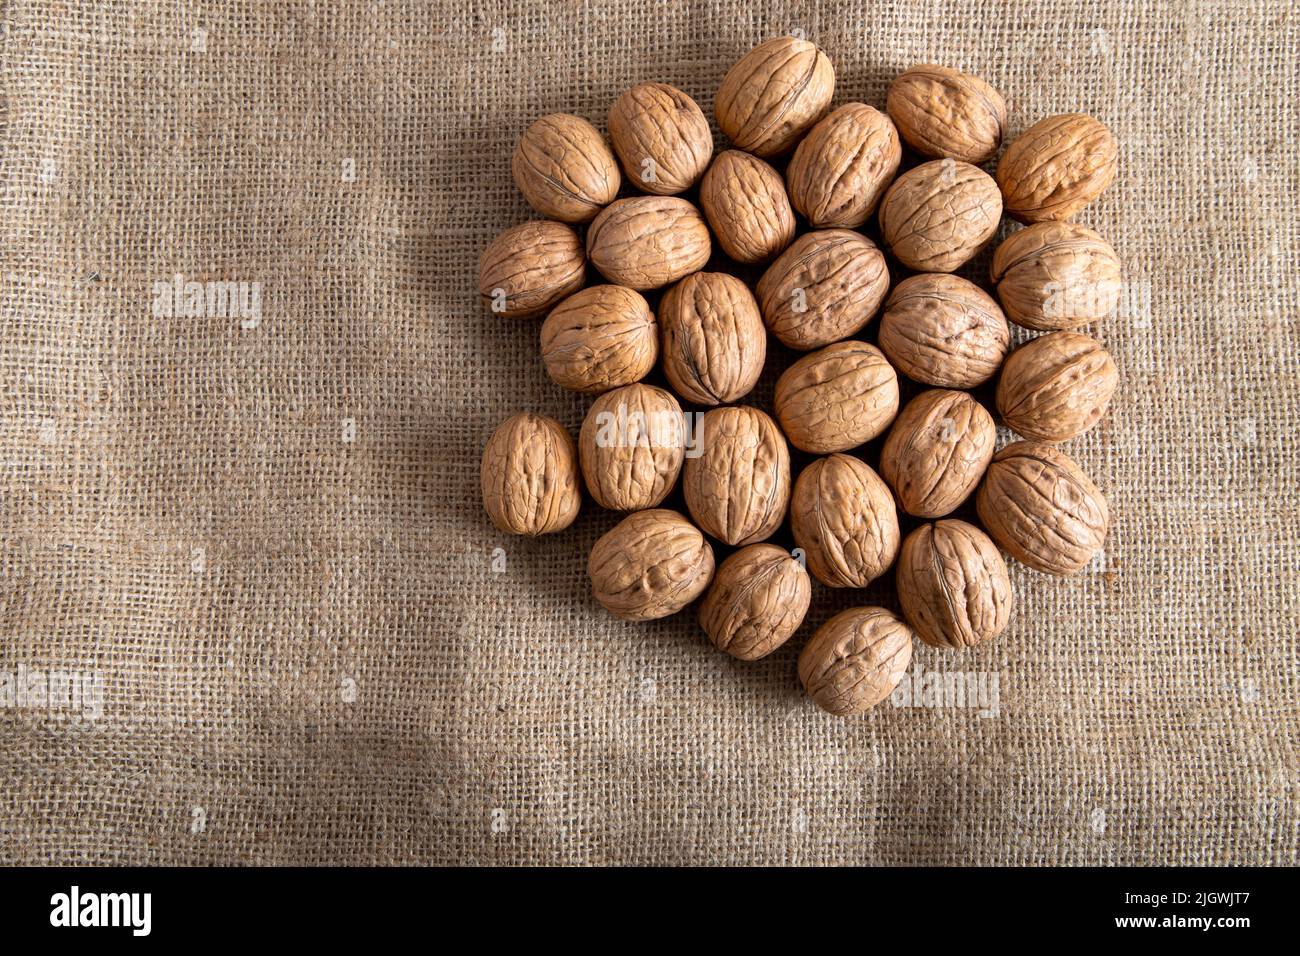 Whole walnuts on burlap sack,closeup Stock Photo